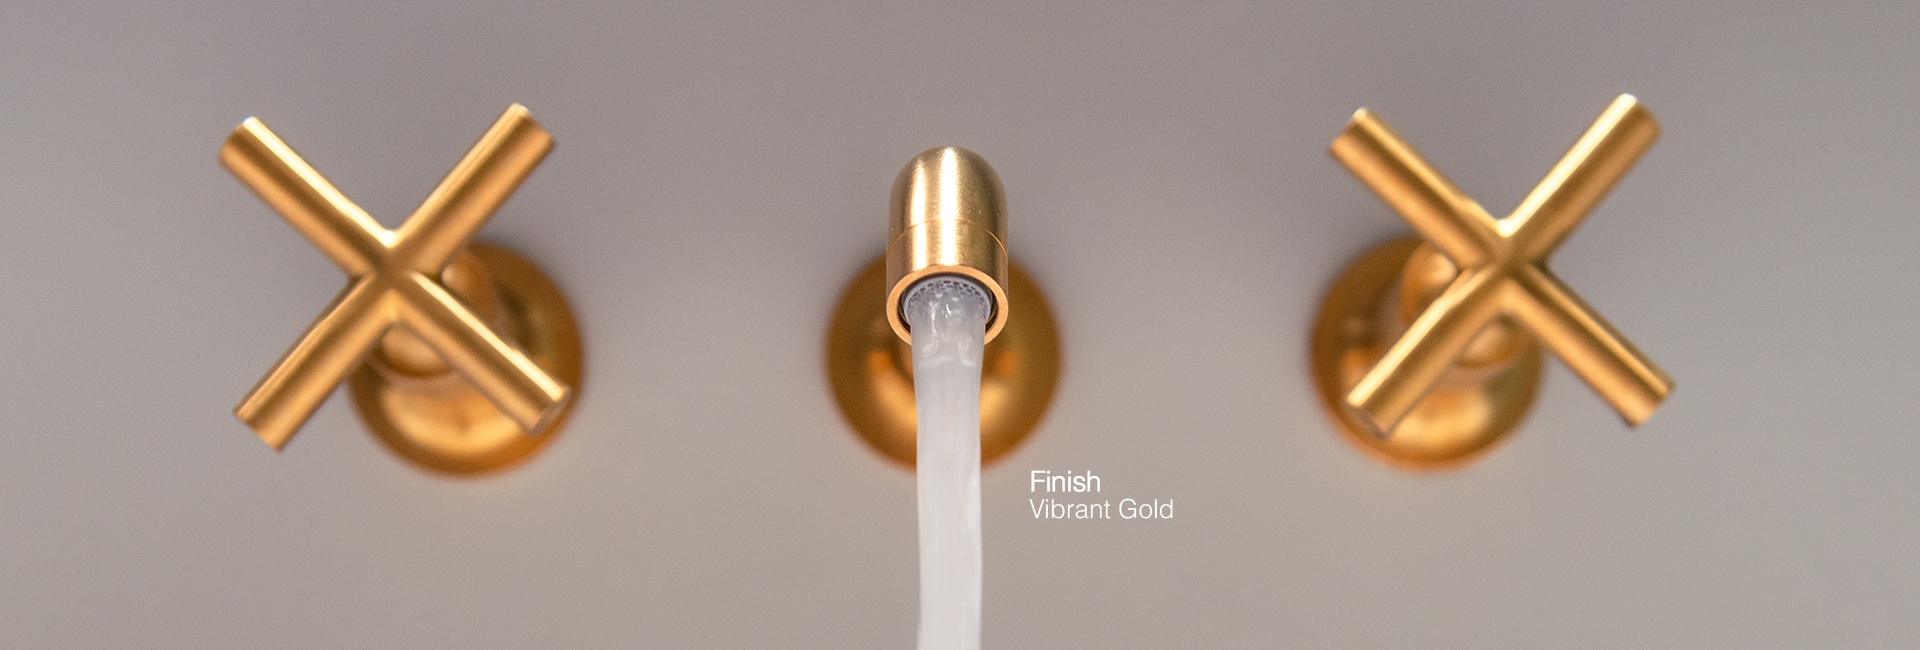 Bathroom Faucet - Aluids - Commercial - Vibrant GoldFinish